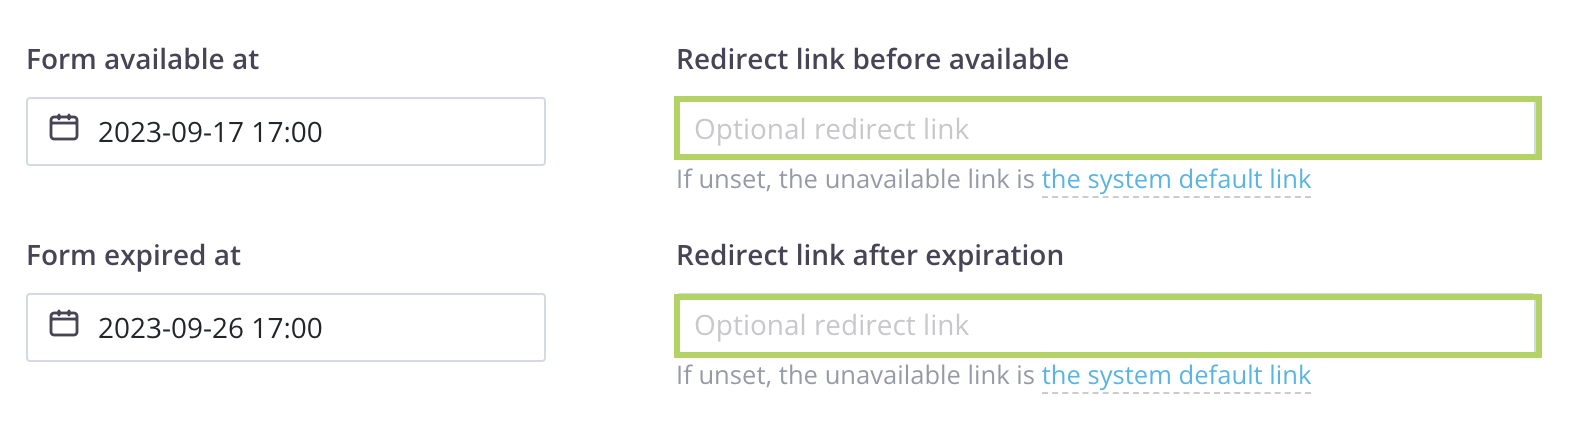 Redirect links